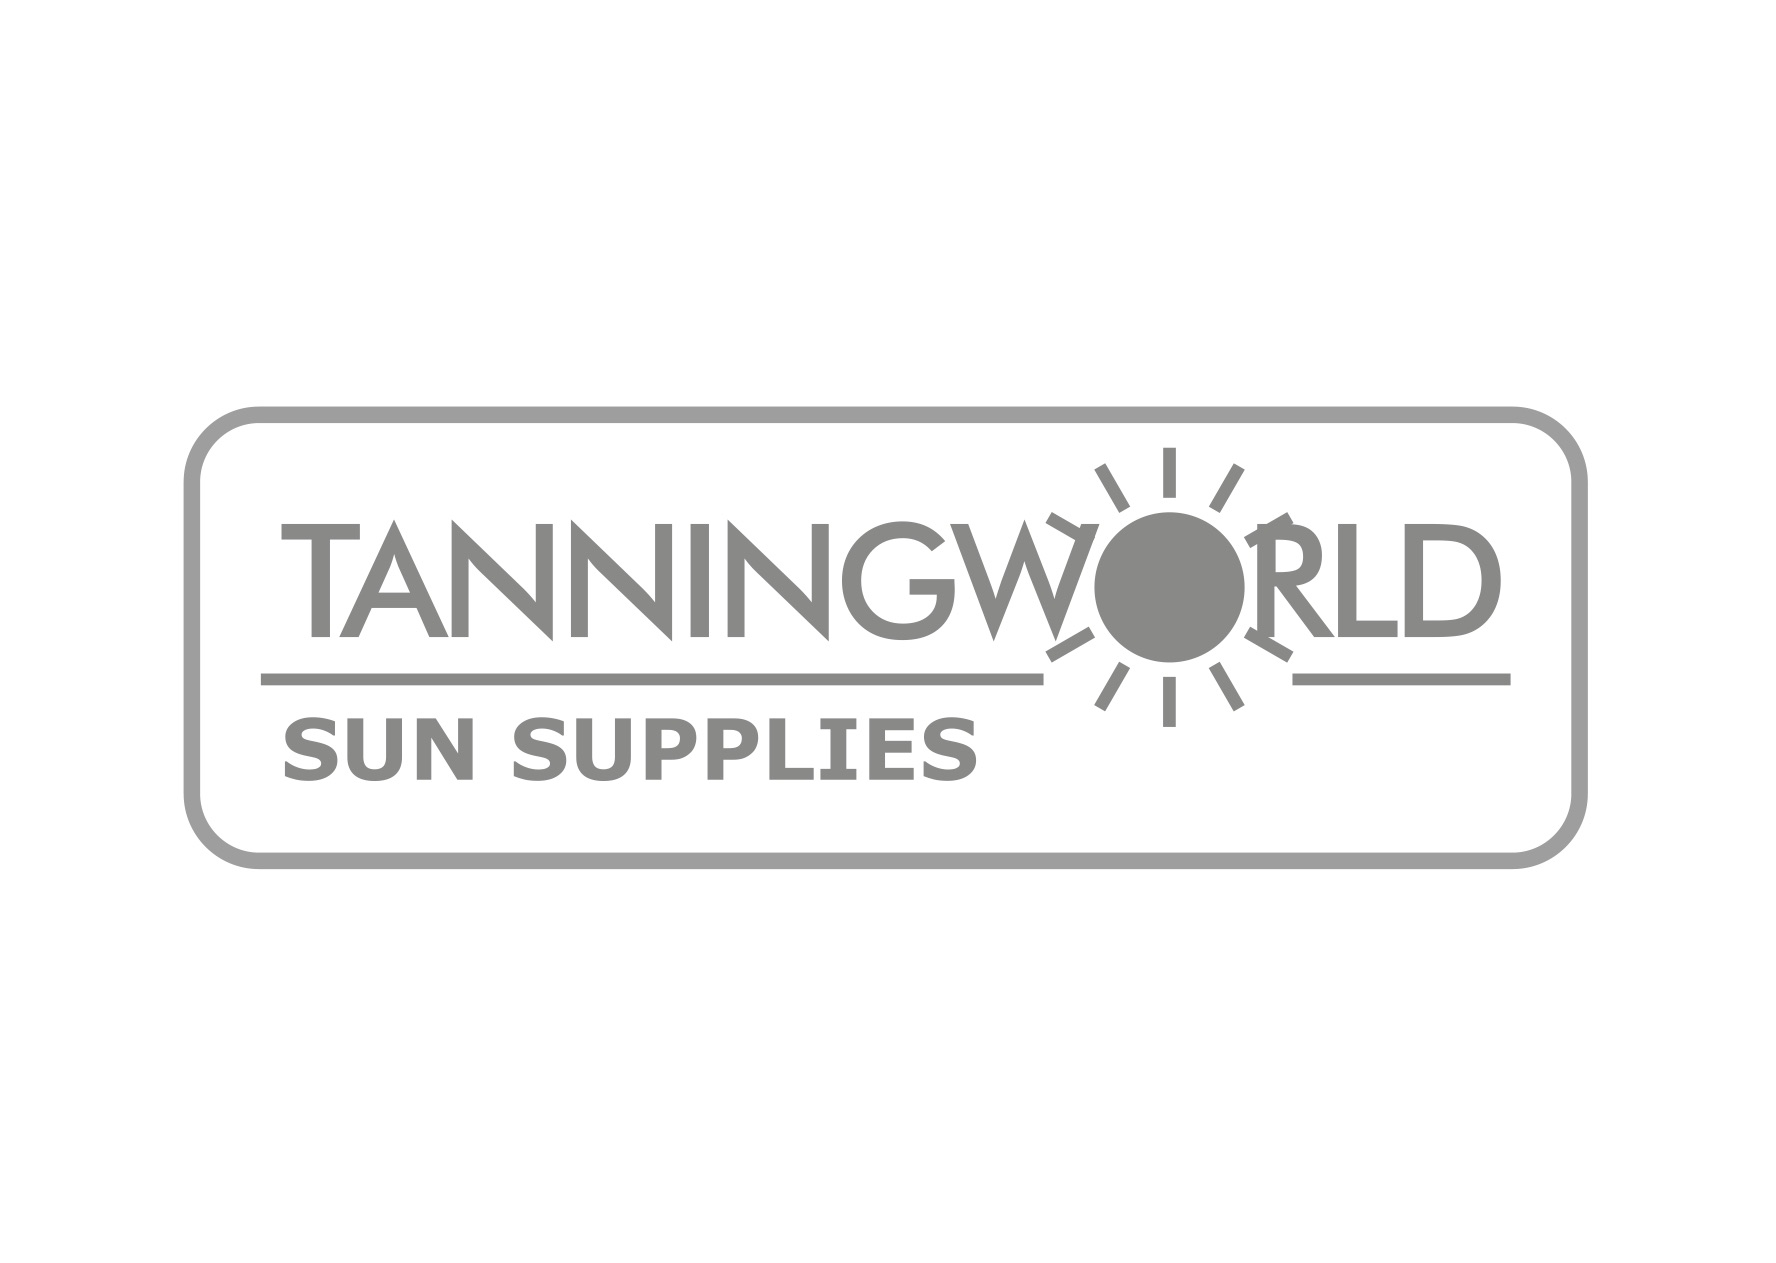 Tanningworld Sun Supplies